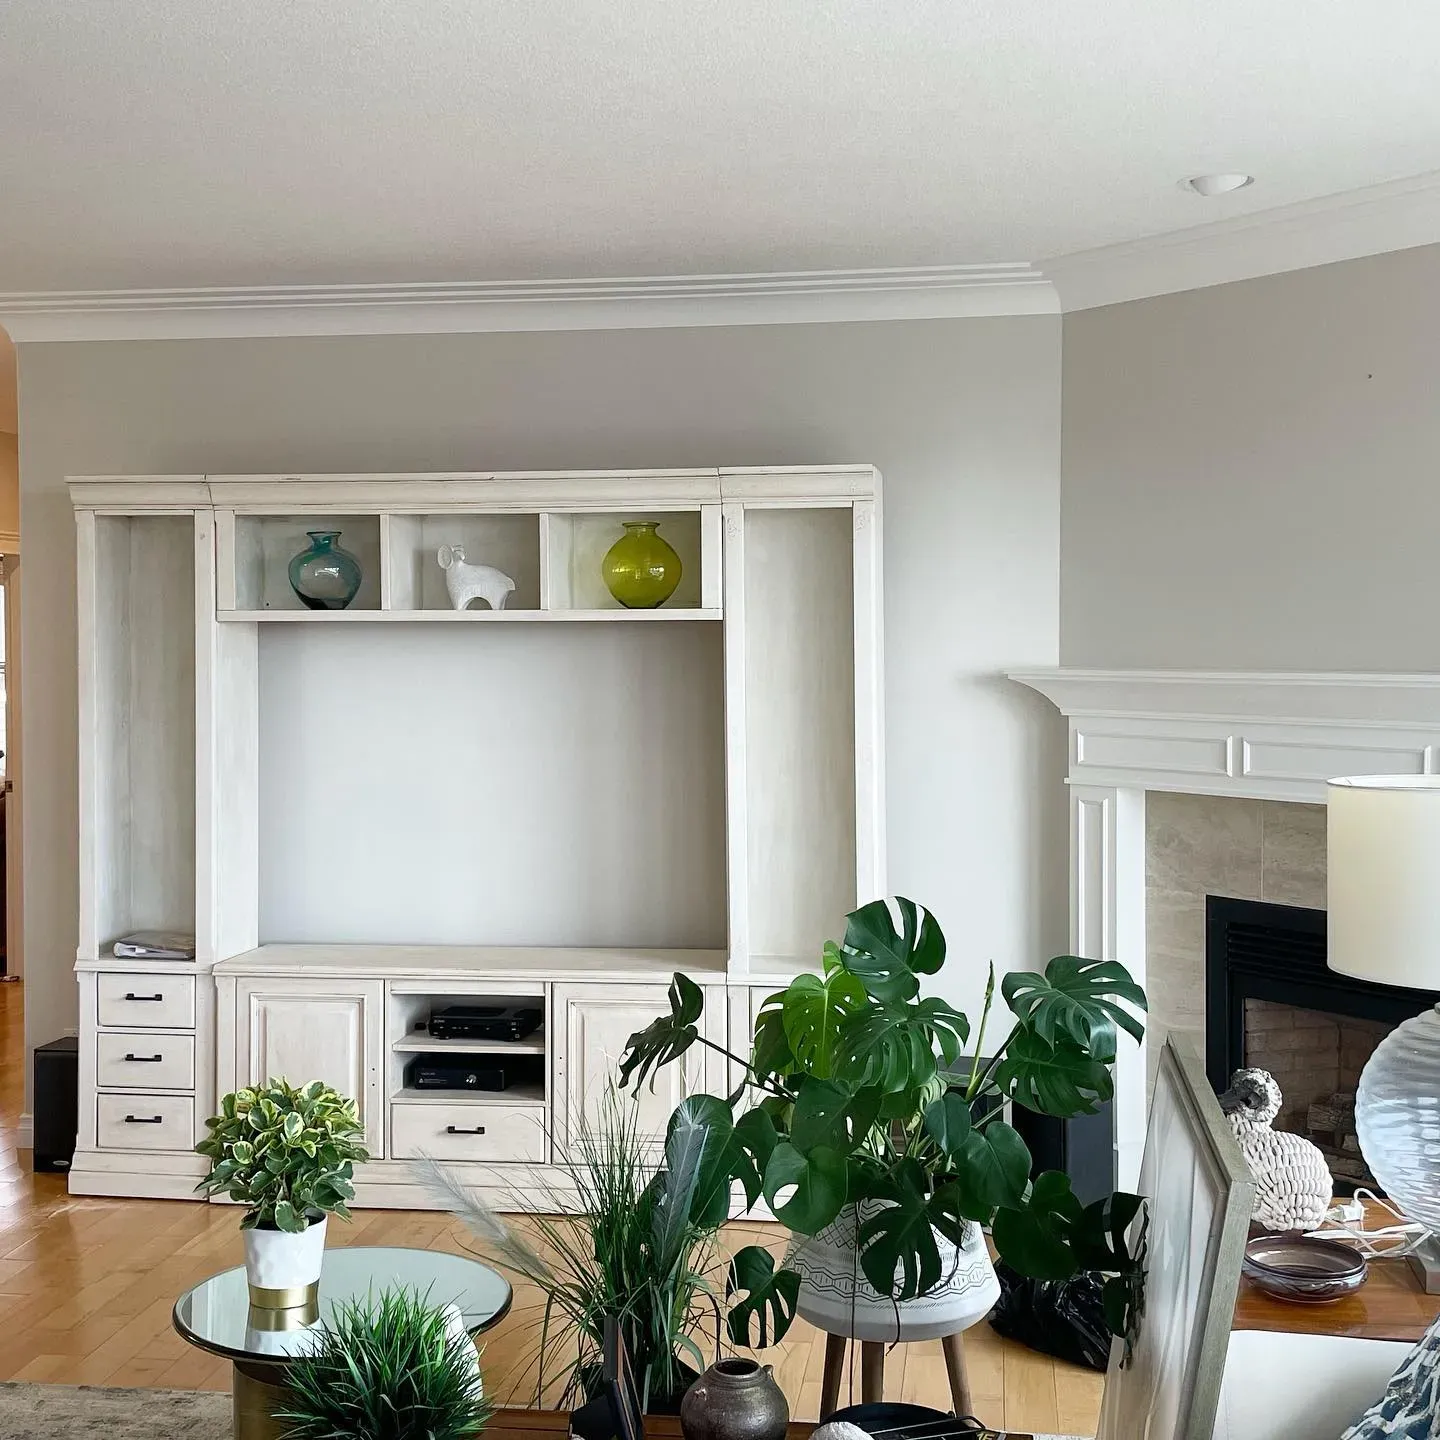 Benjamin Moore OC-31 living room paint review